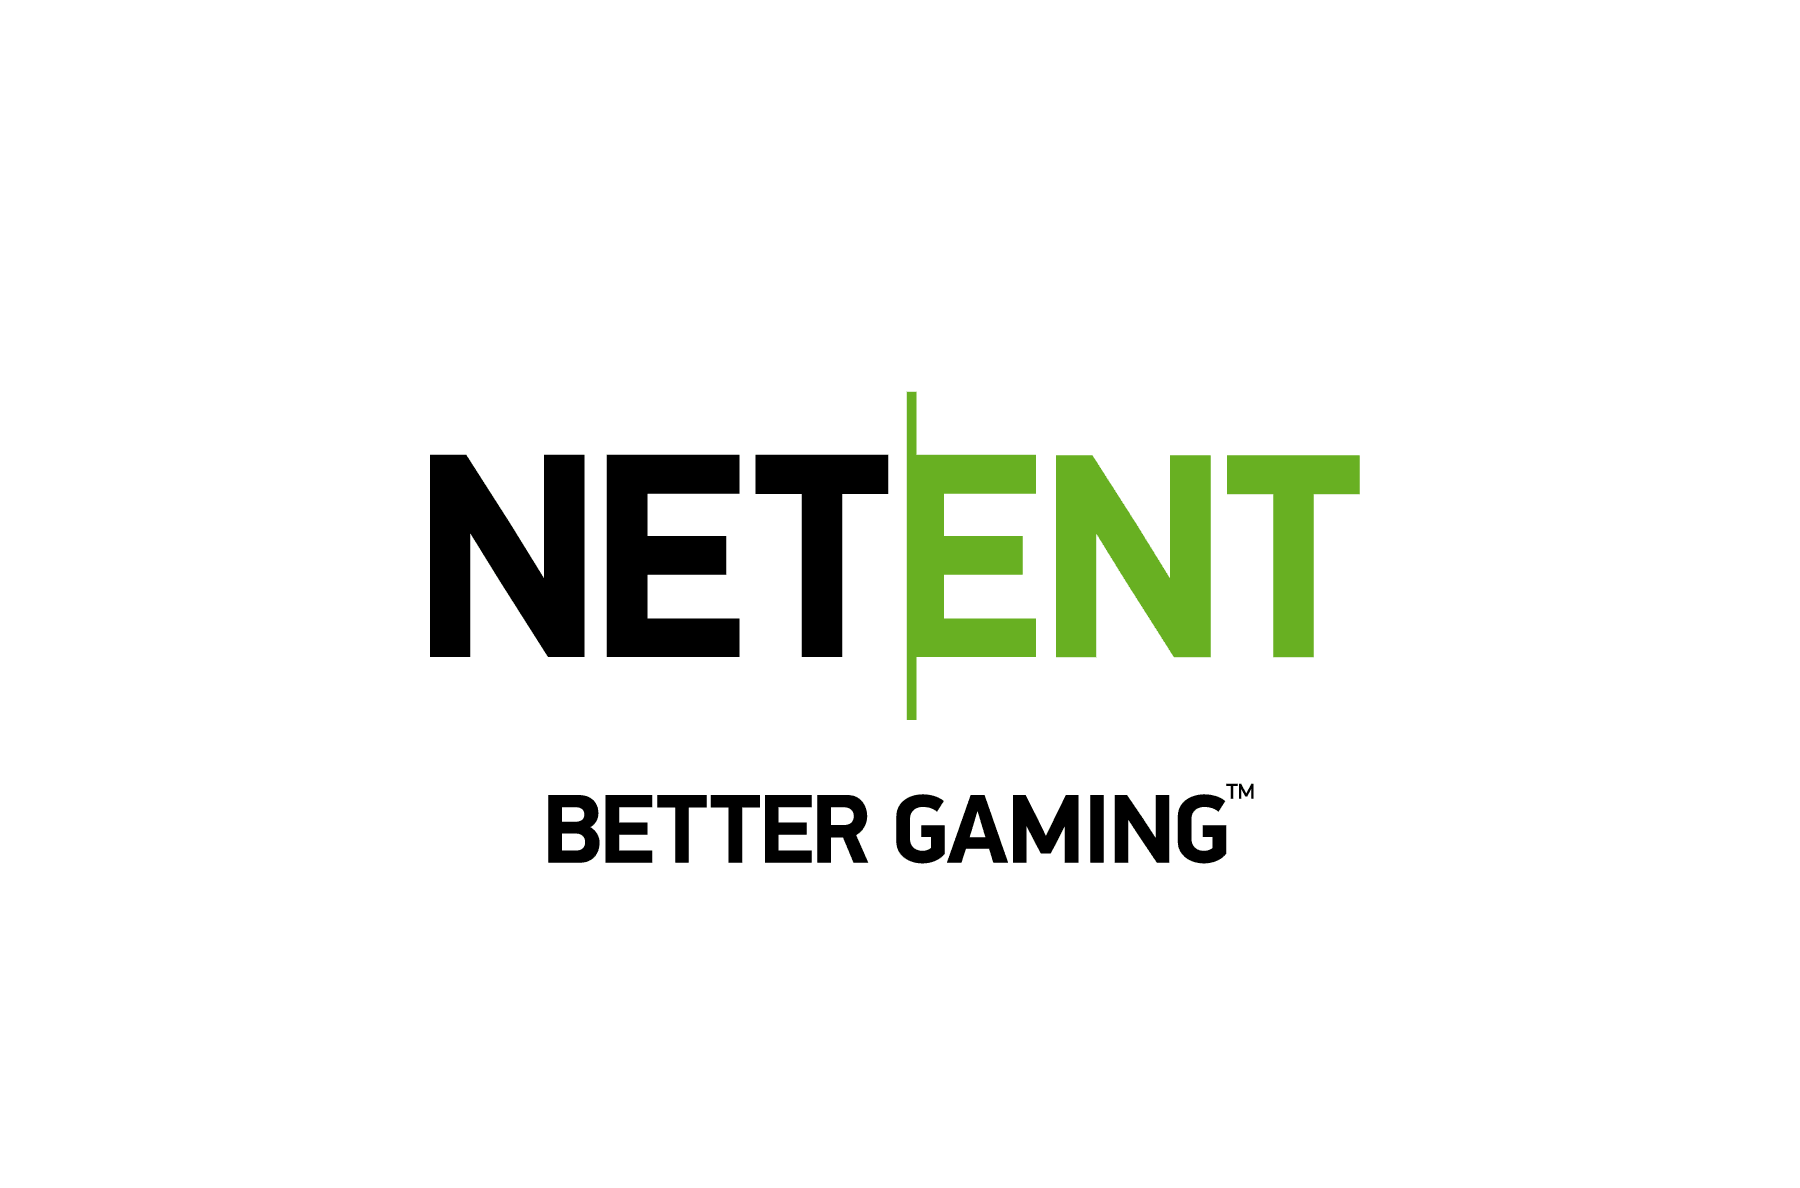 Most Popular NetEnt Online Slots